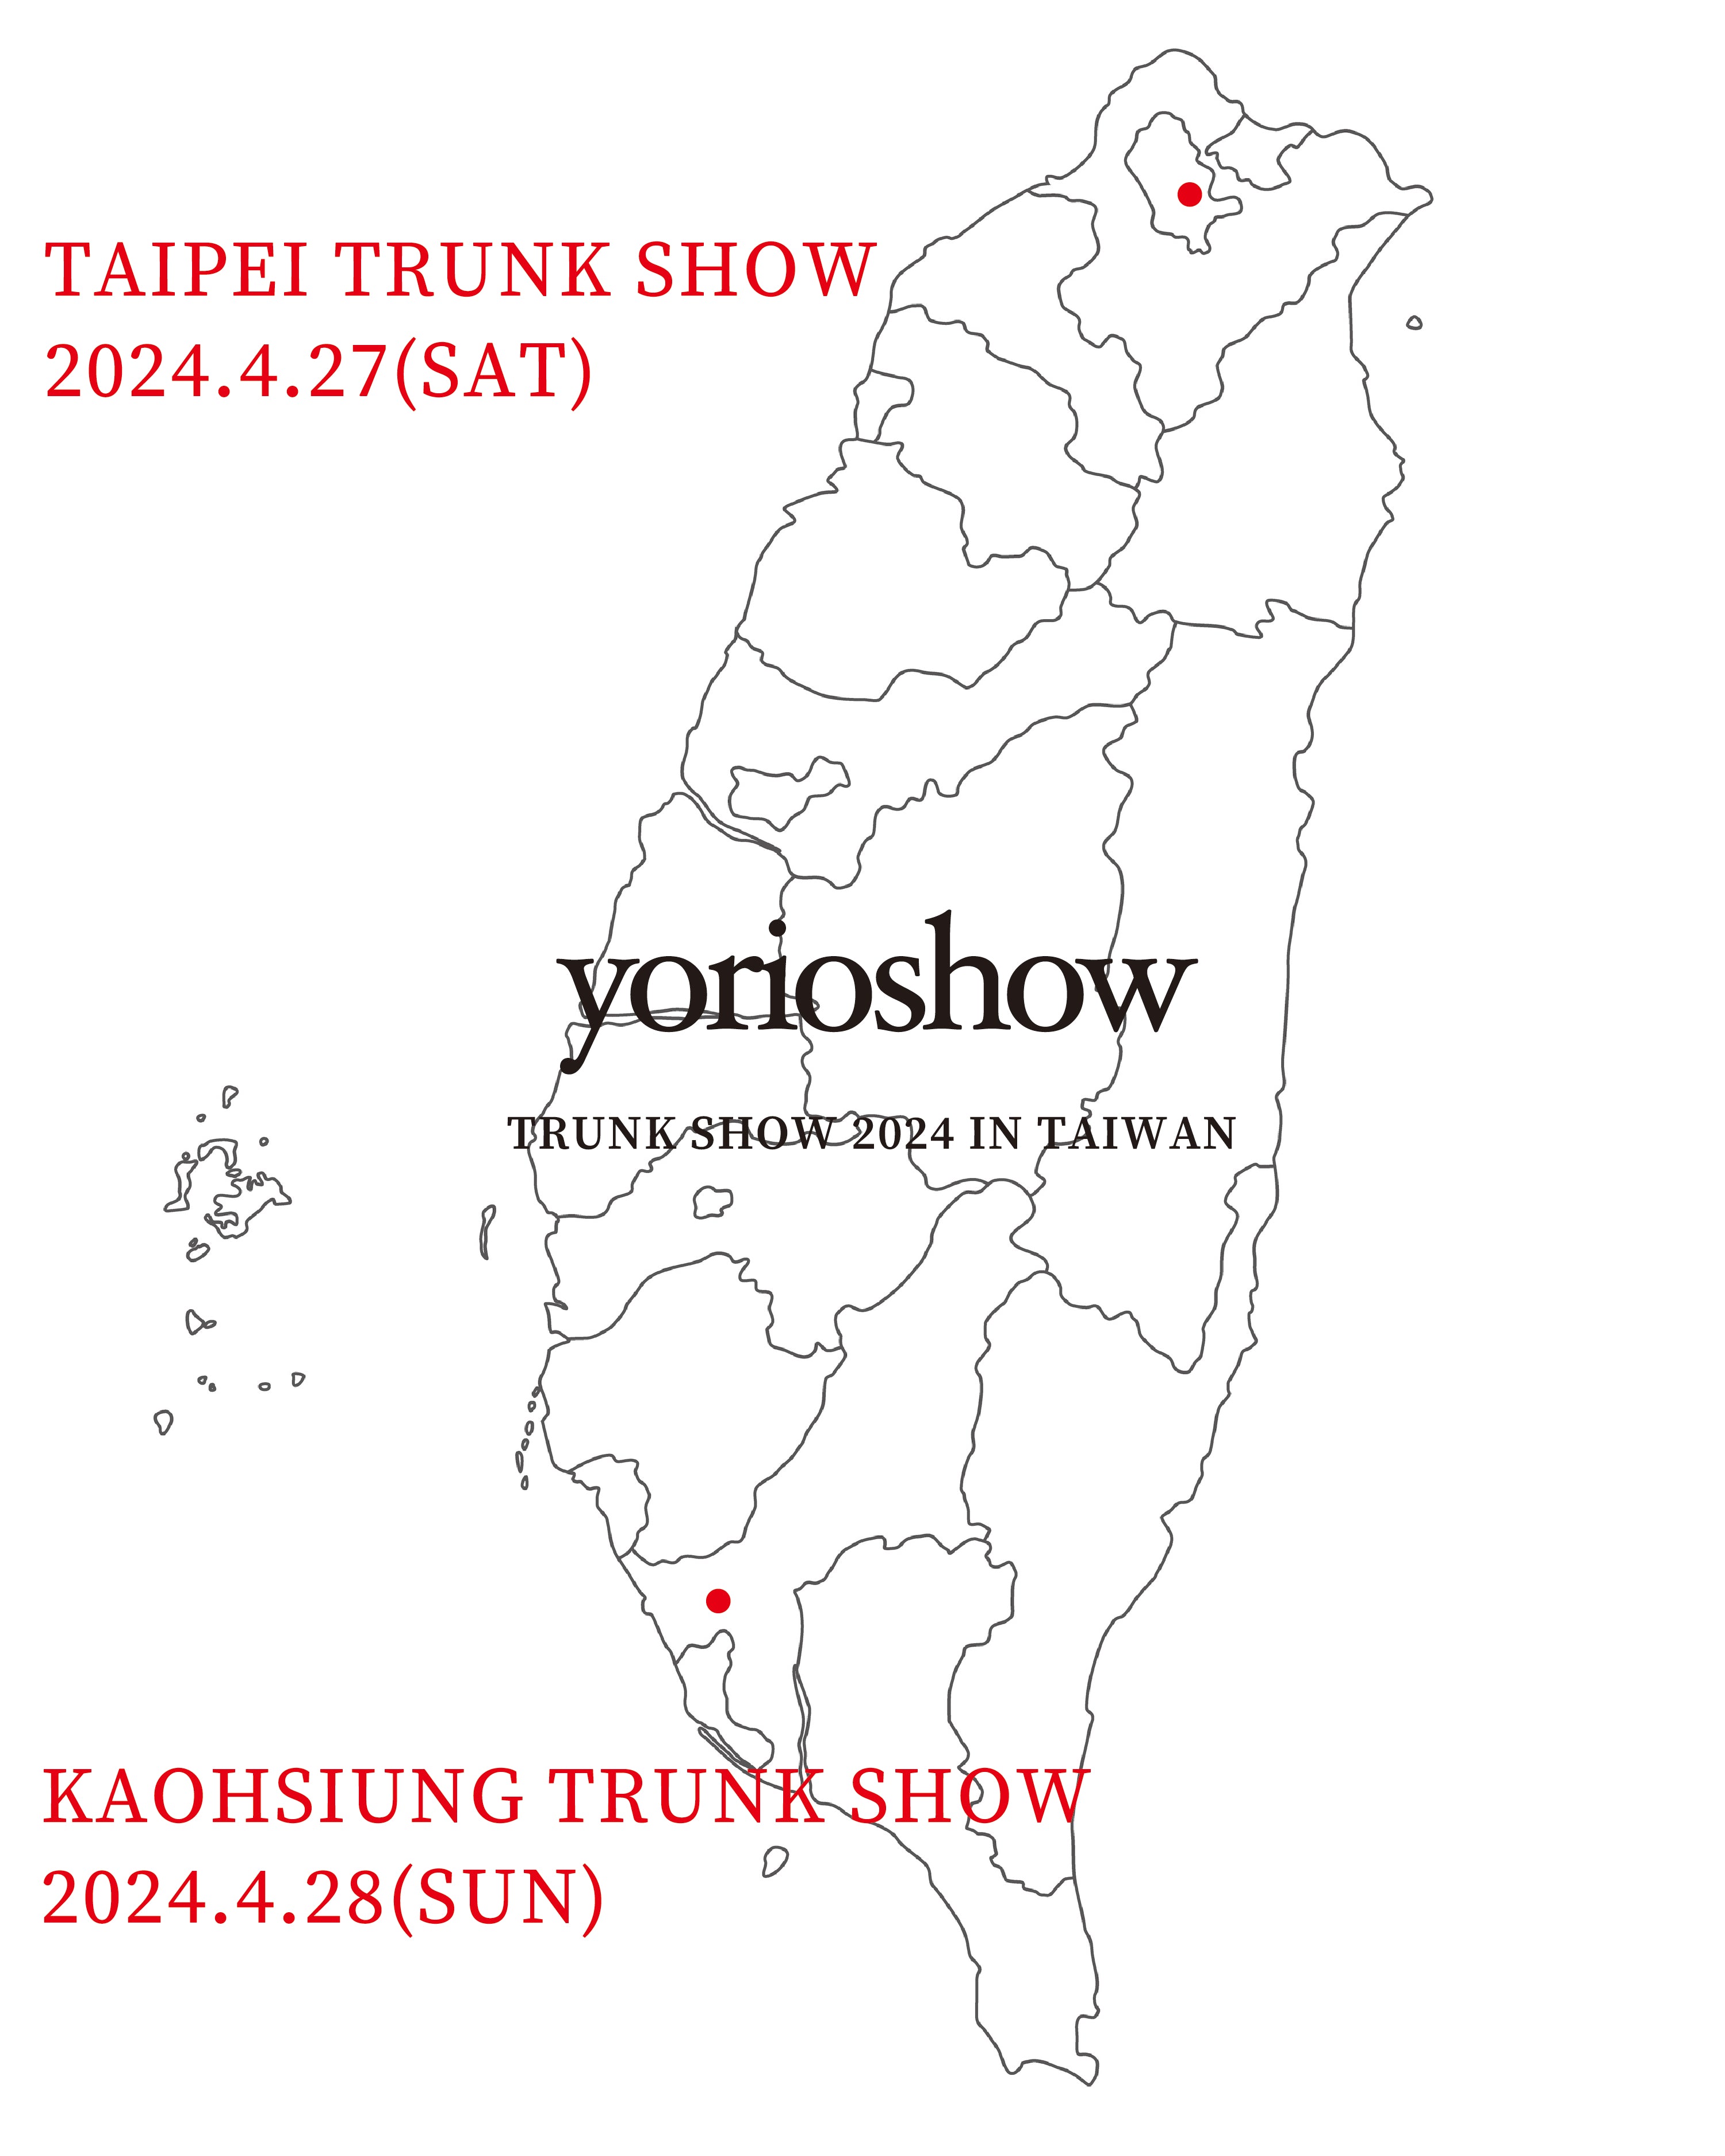 yorioshow TRUNK SHOW 2024 IN TAIWAN